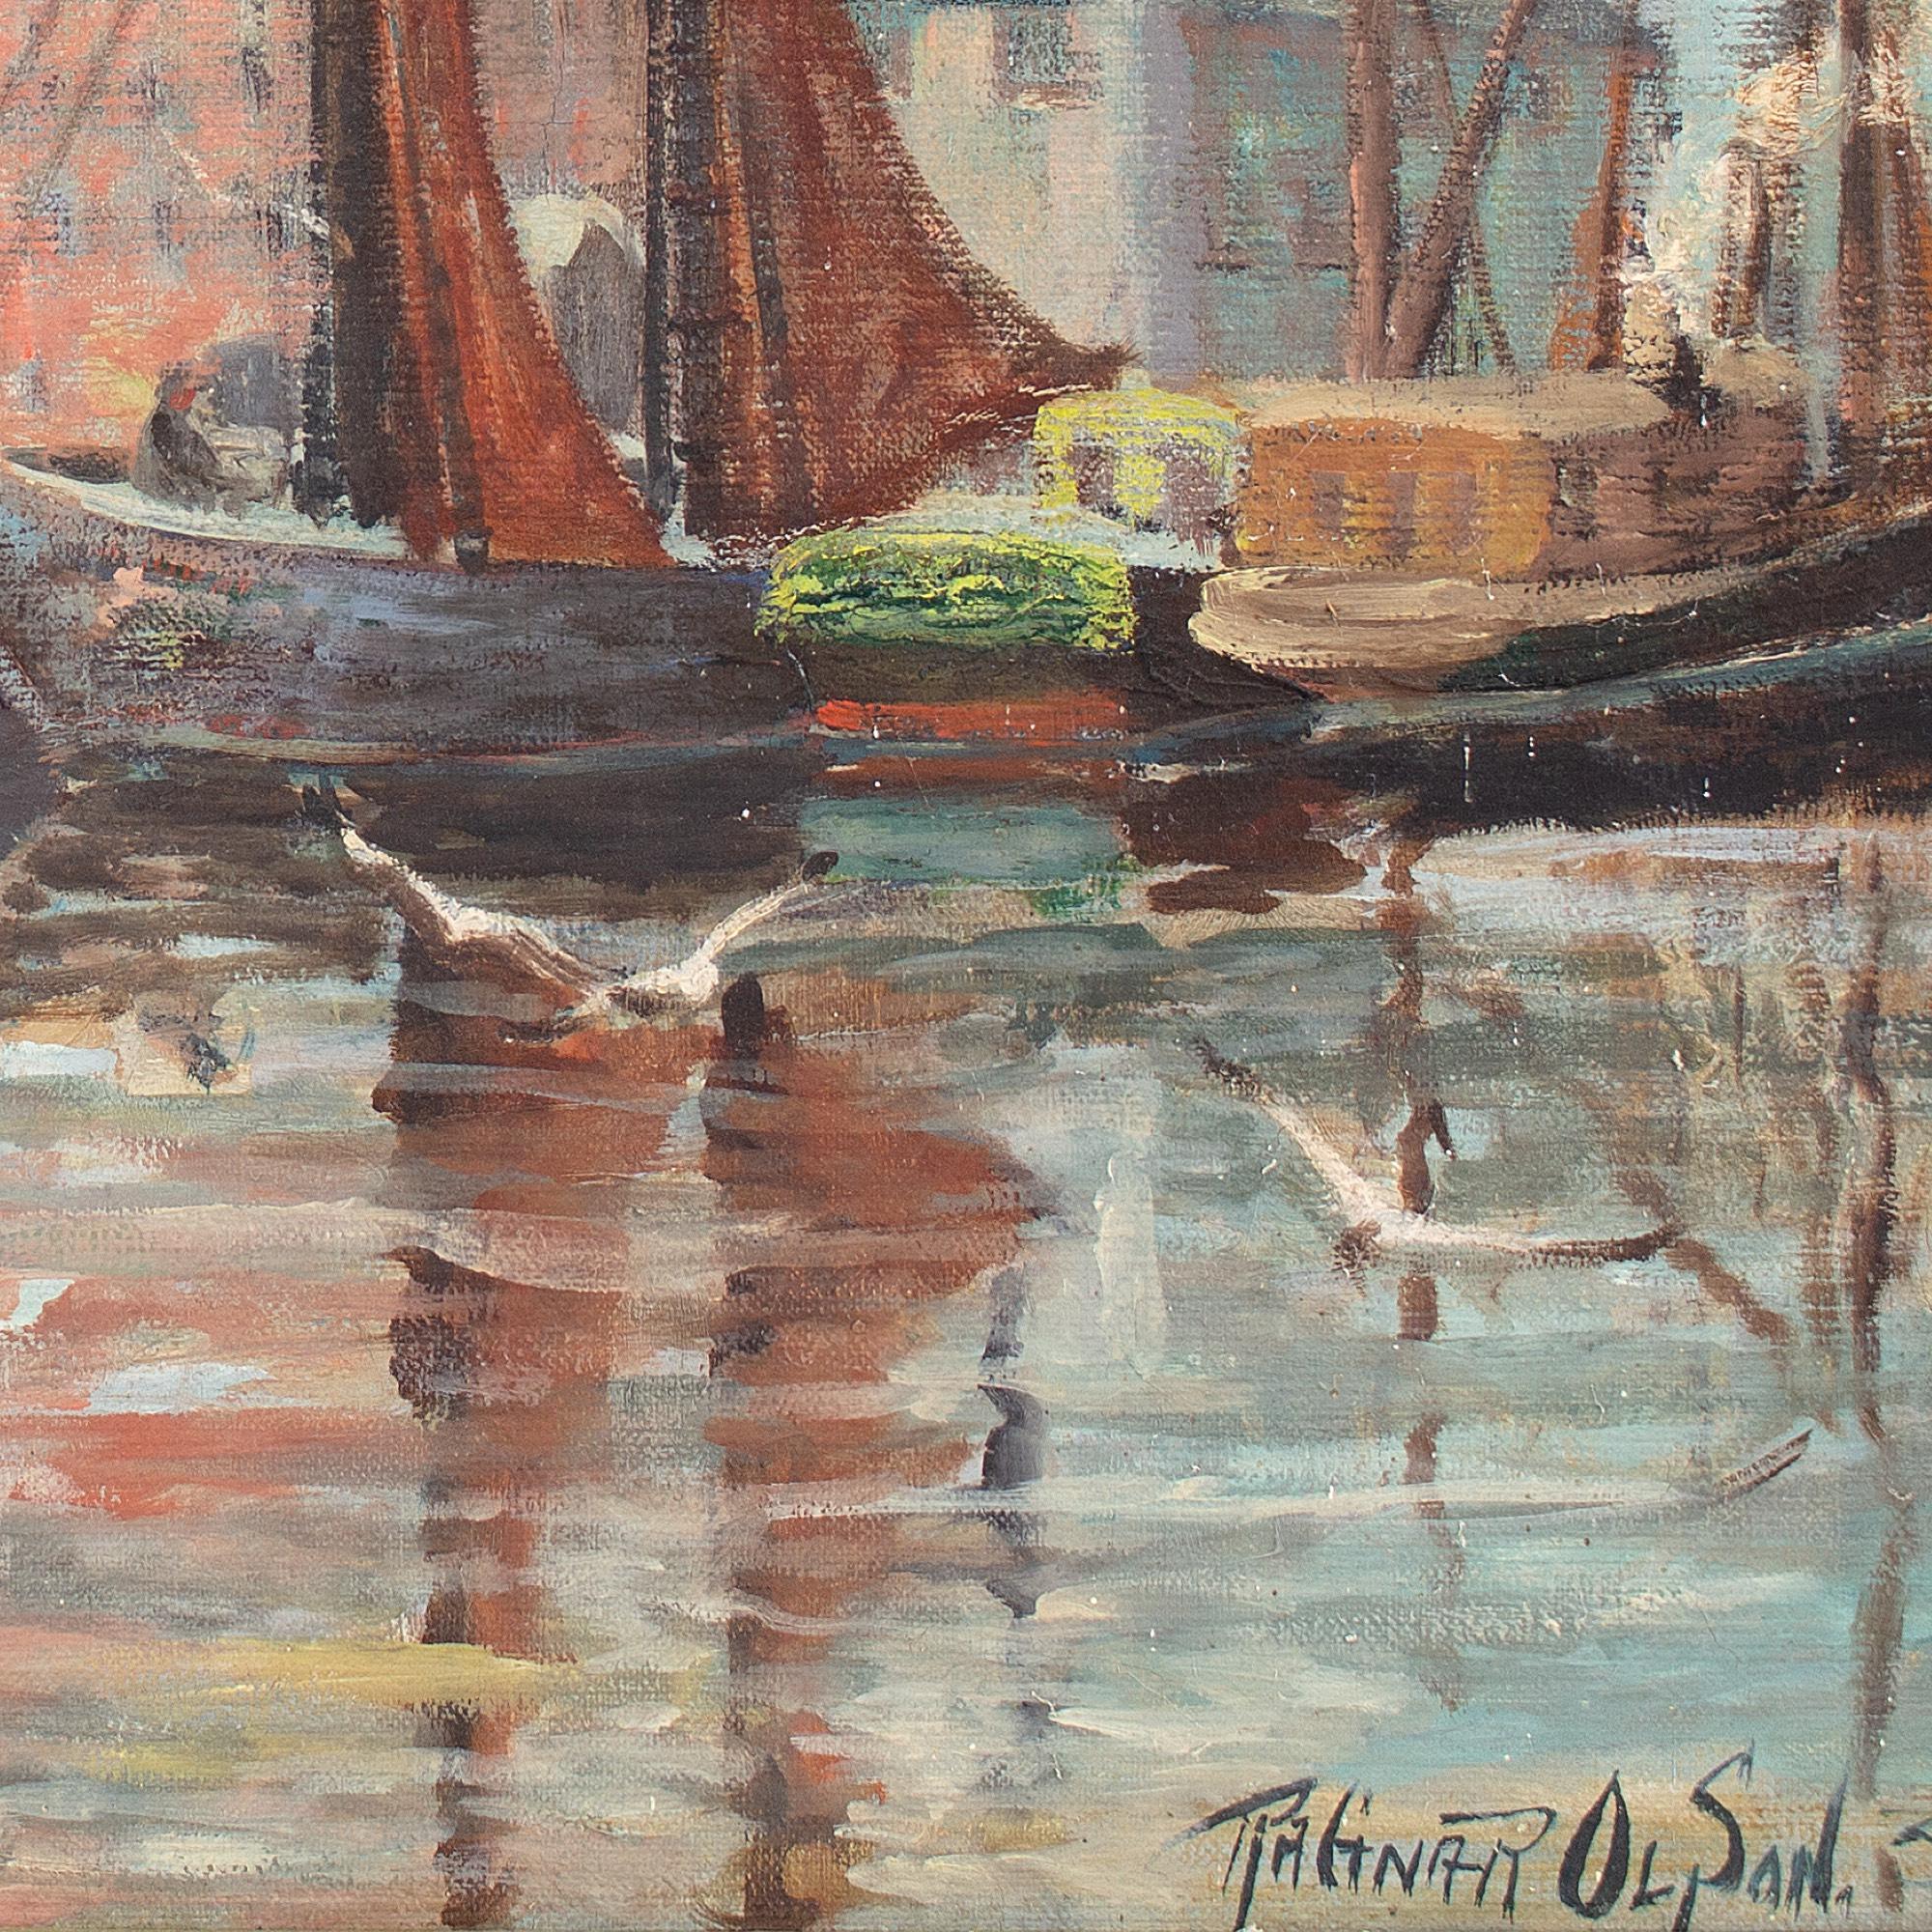 Ragnar Olson, Fulton Fish Market, New York, Oil Painting  9